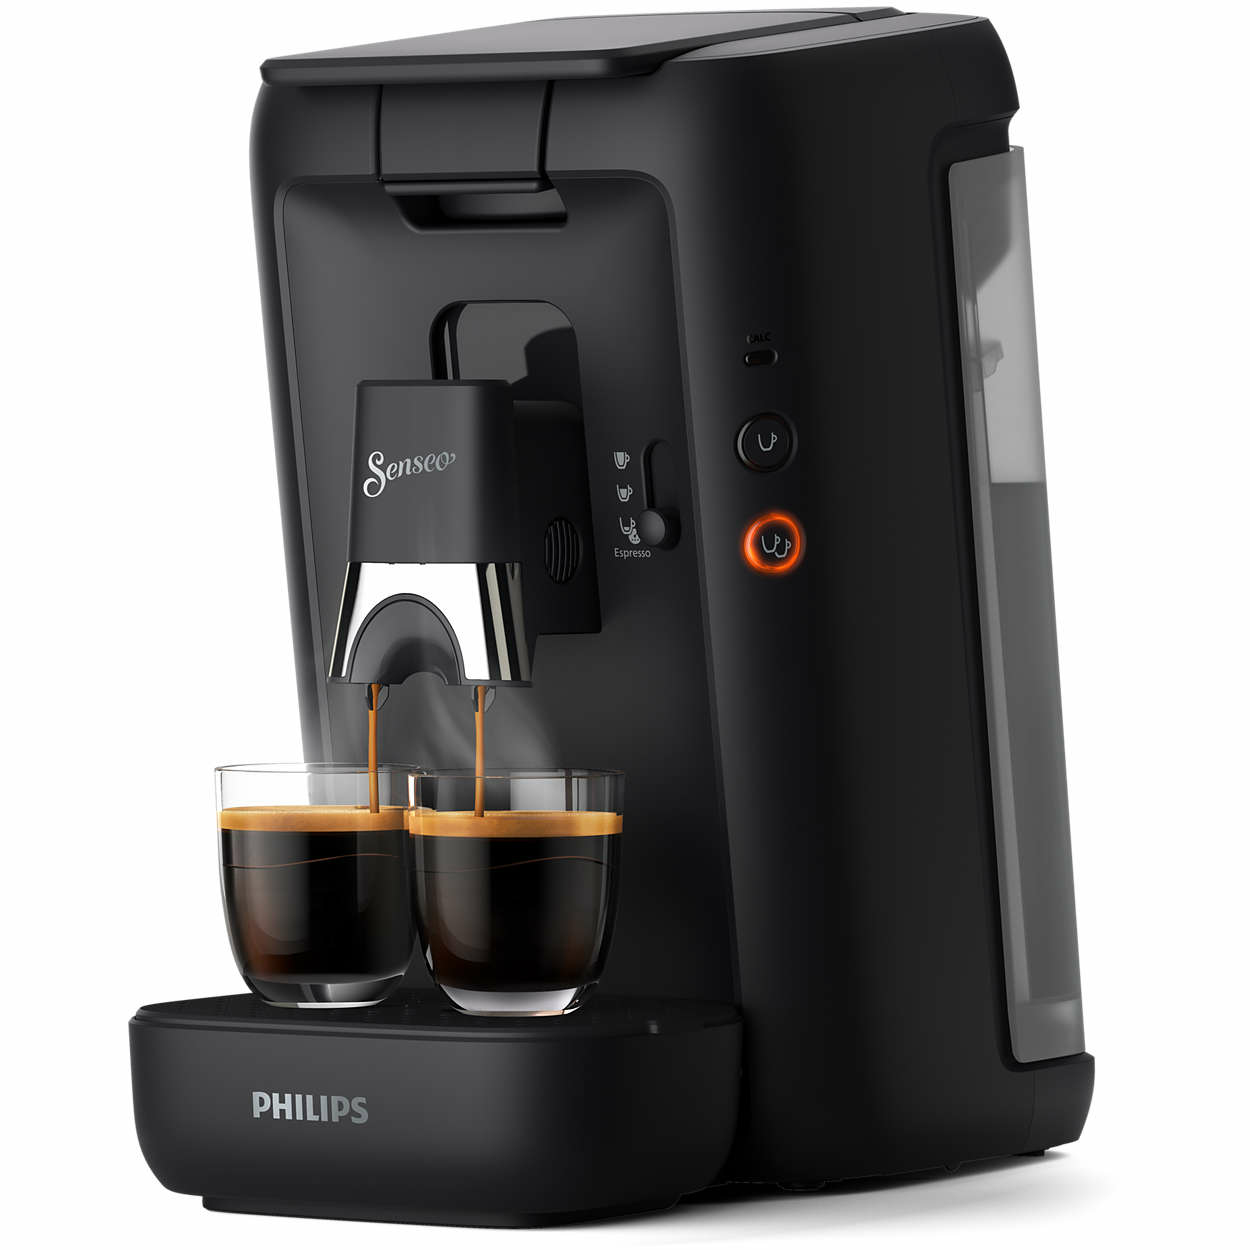 Philips by Versuni CSA260/61R1 coffee maker